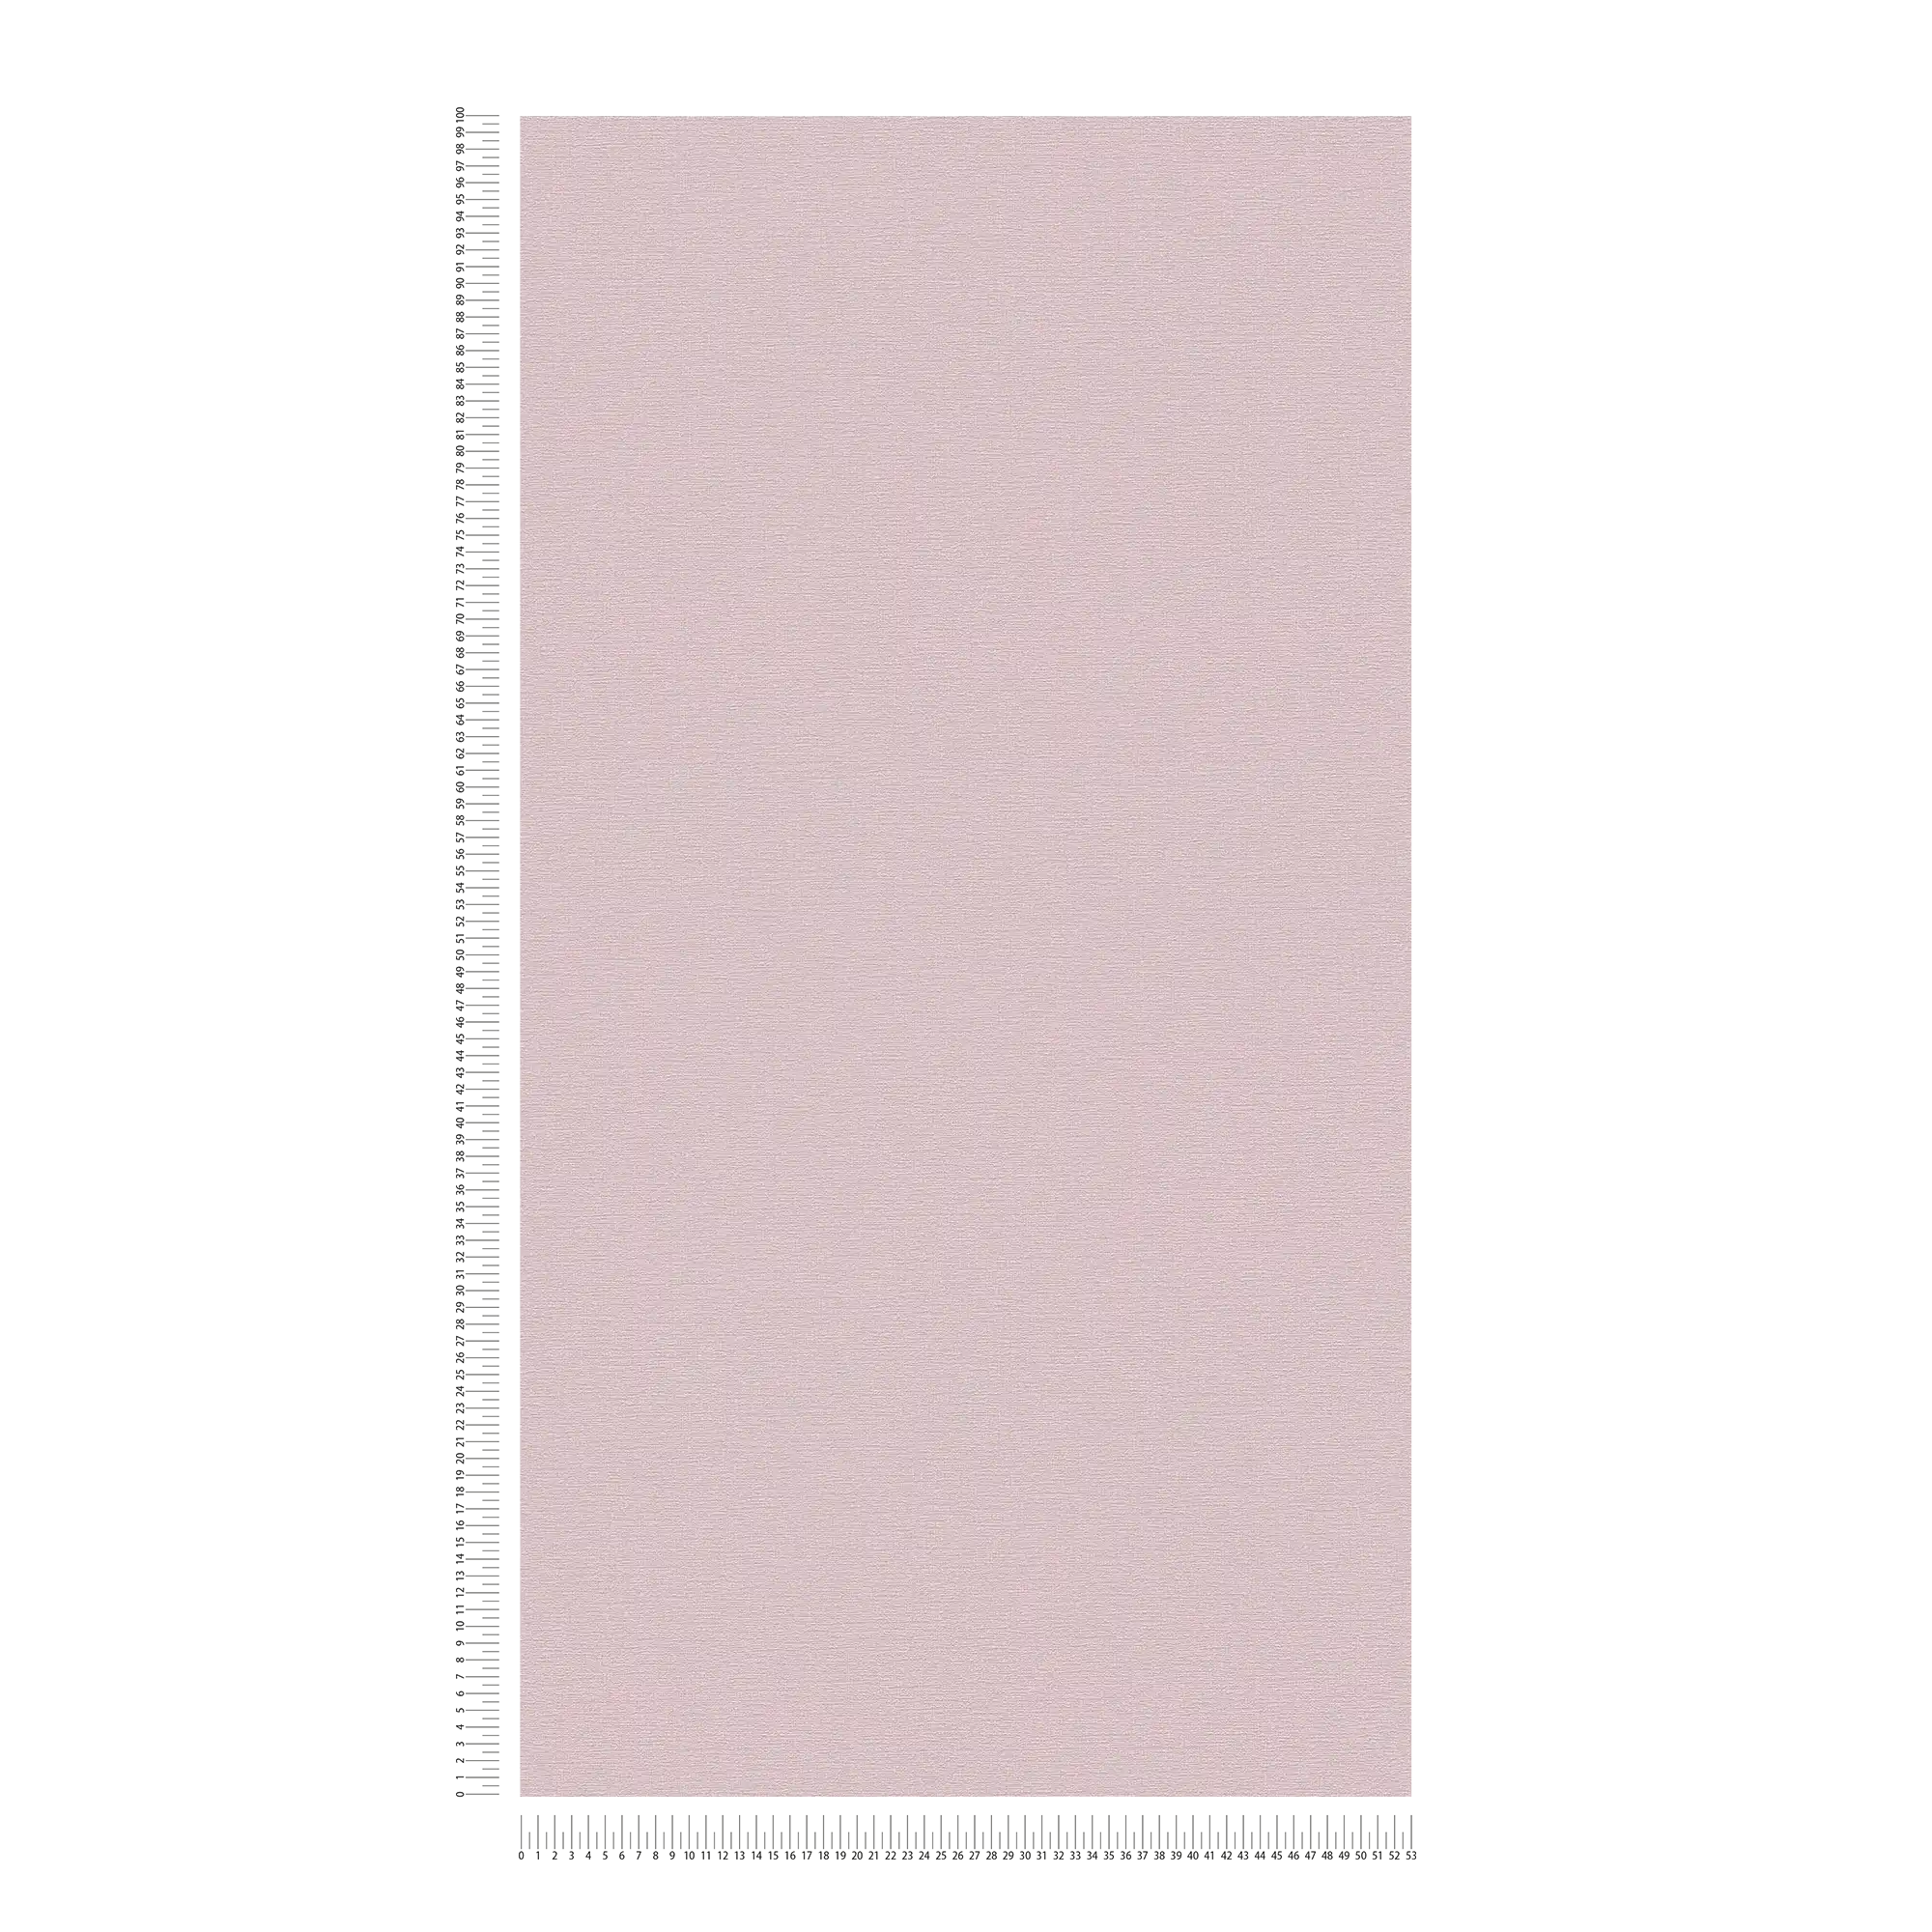             Plain wallpaper with light texture - pink, dusky pink
        